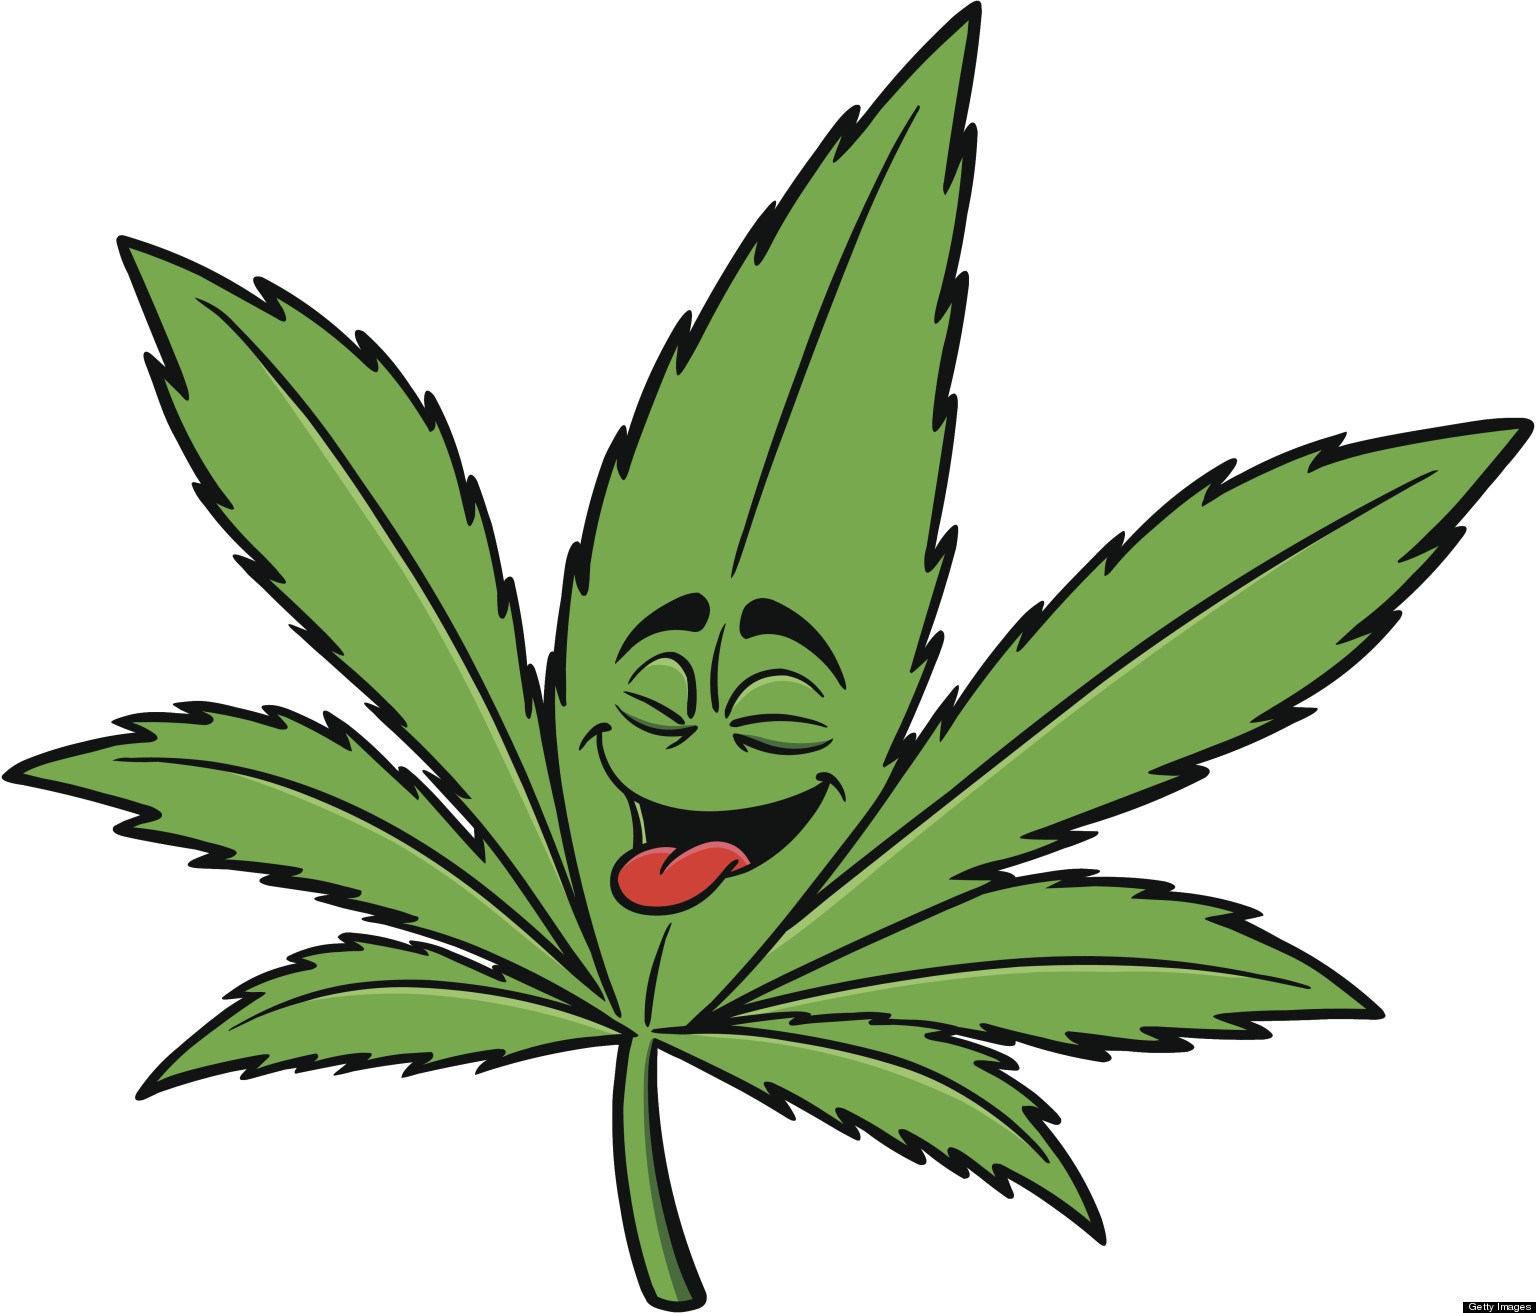 File:Cannabis leaf.svg - Wiki